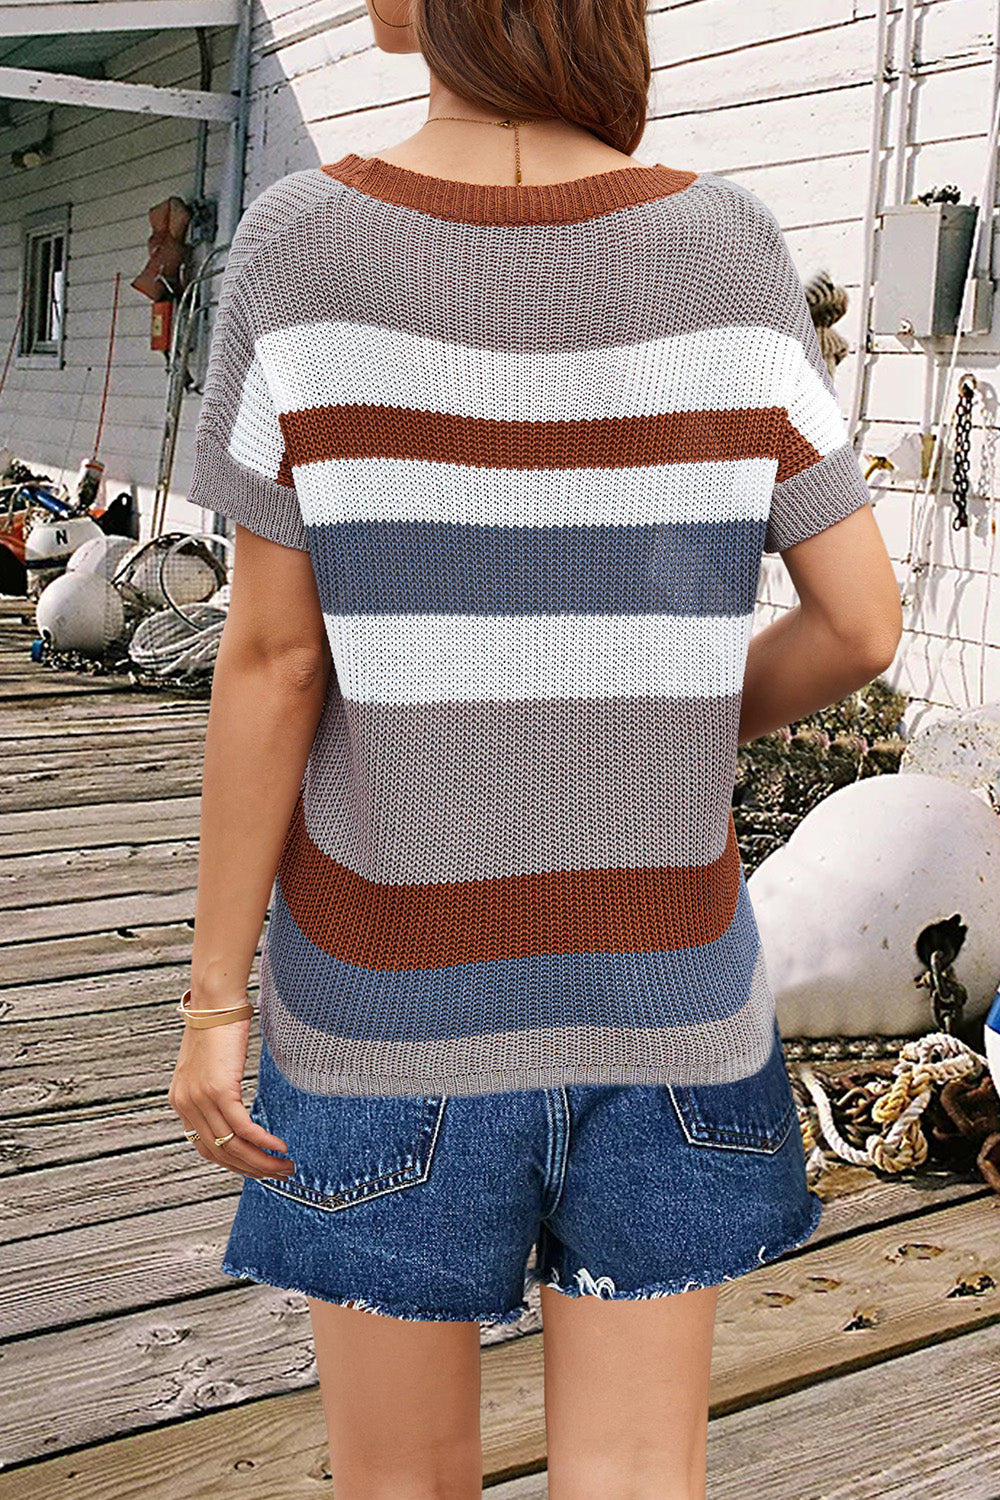 Striped Round Neck Short Sleeve Knit Top Shirt